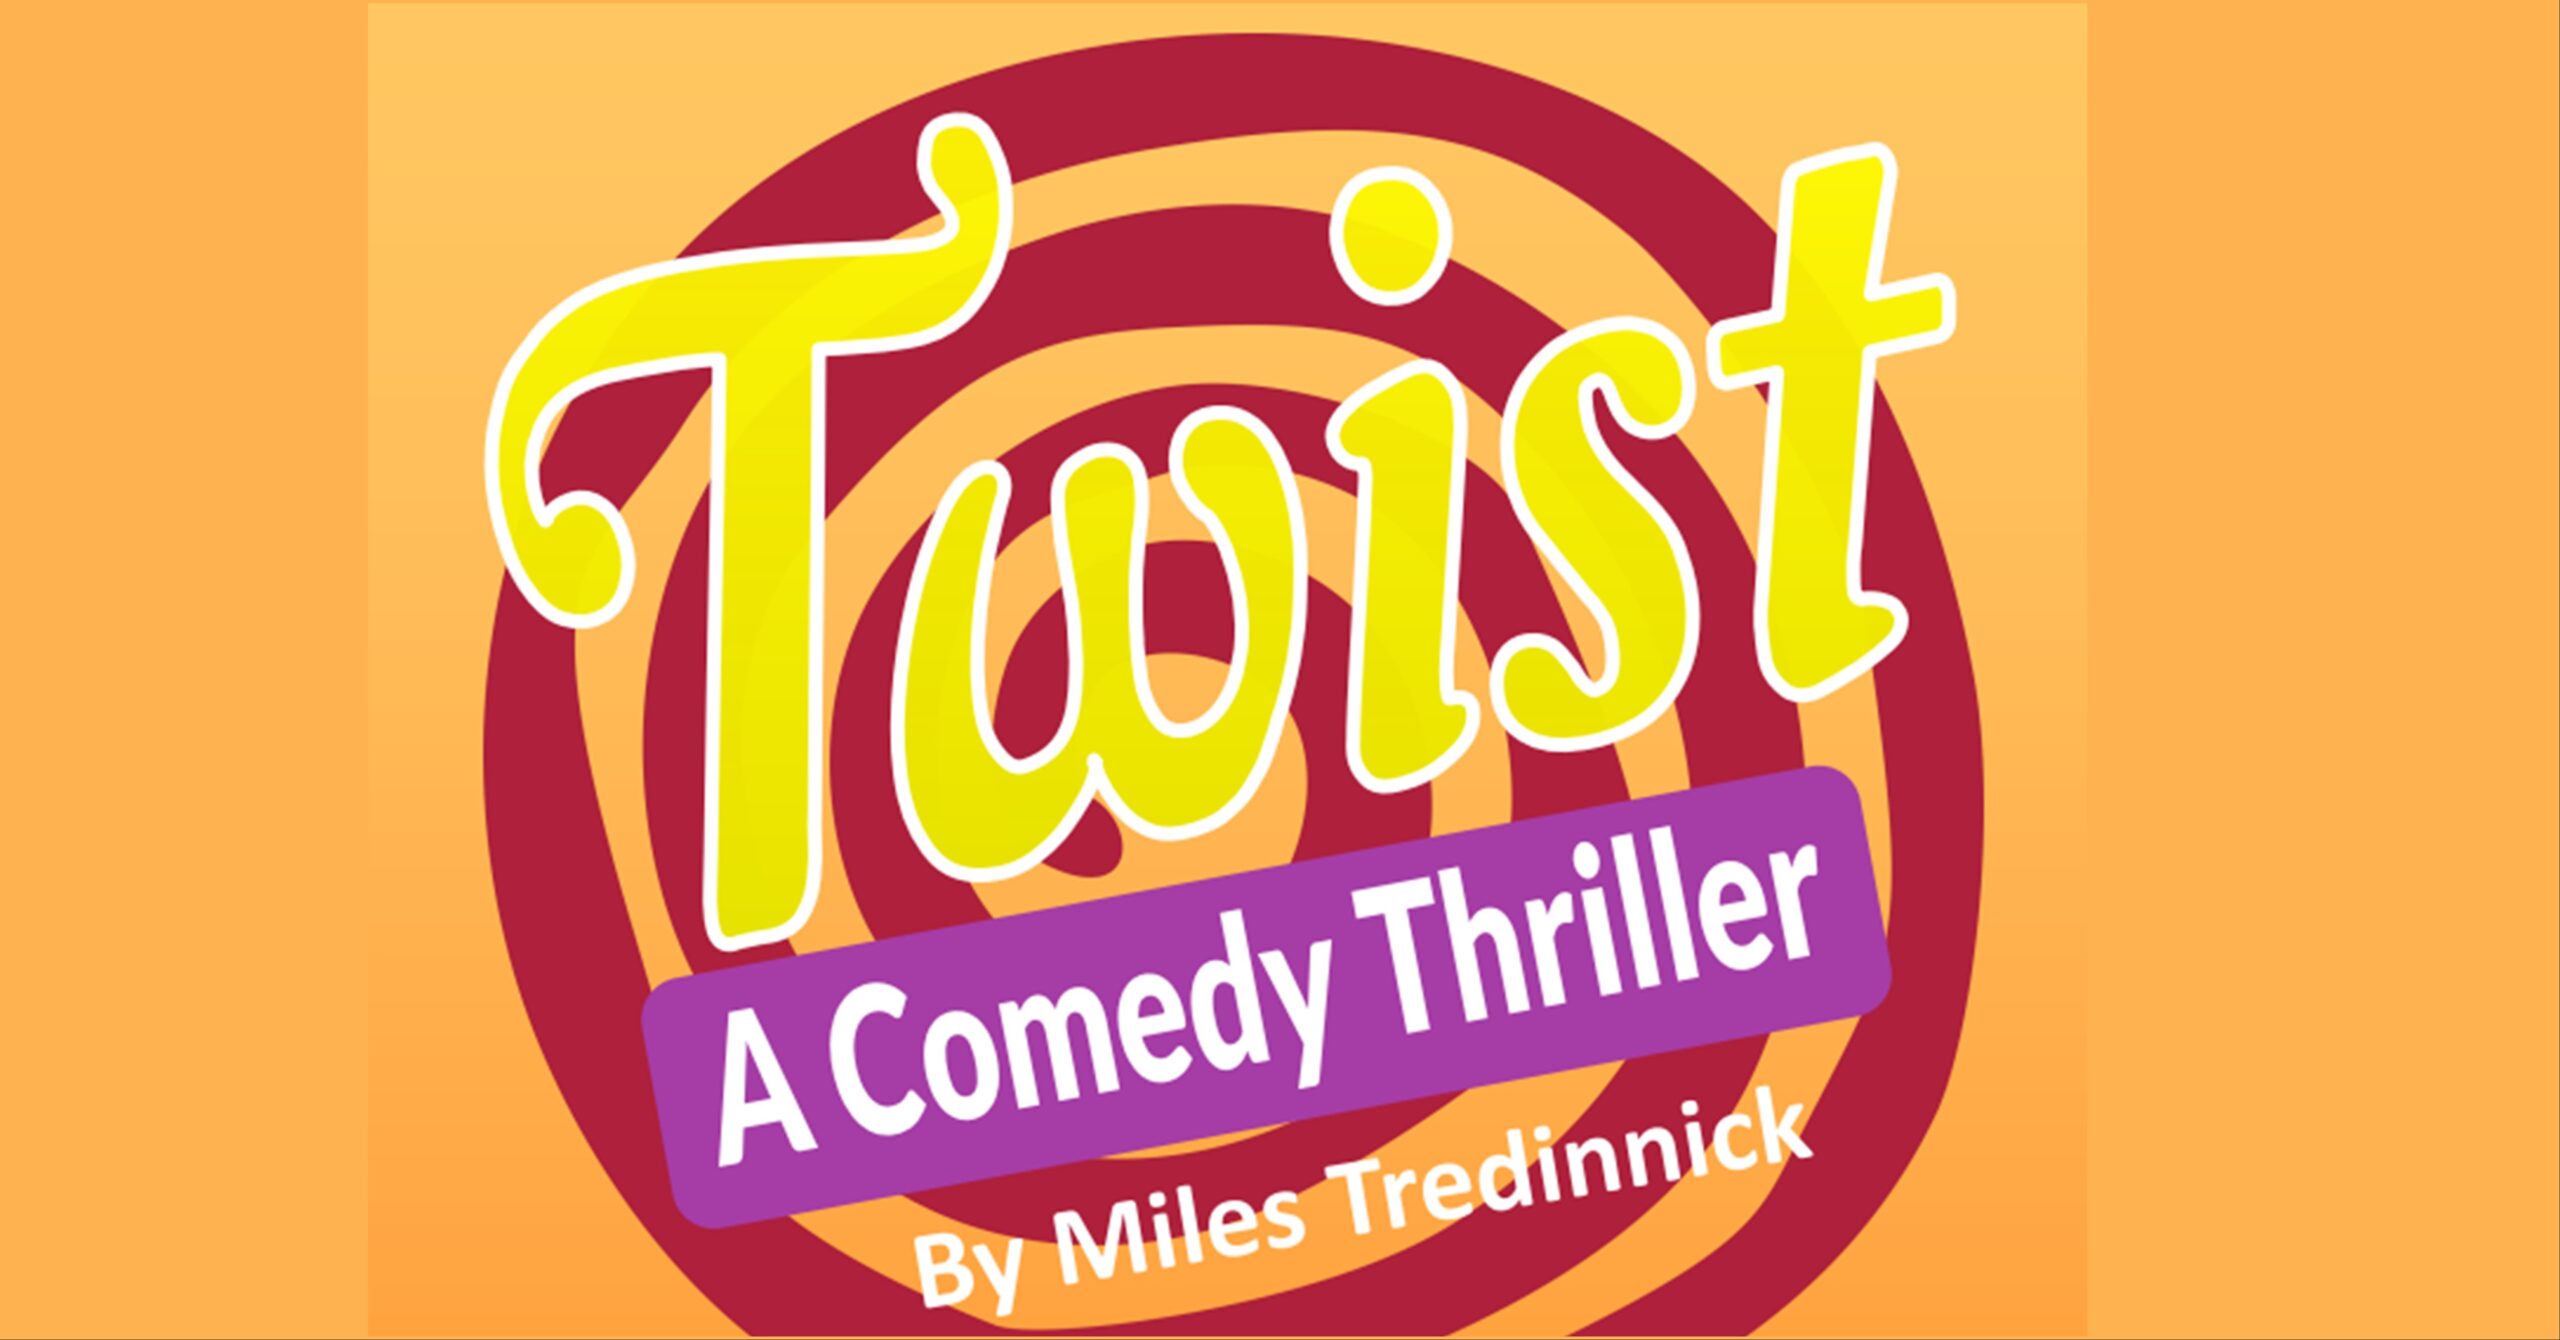 Art Center Theatre Presents: Twist, a Comedy Thriller